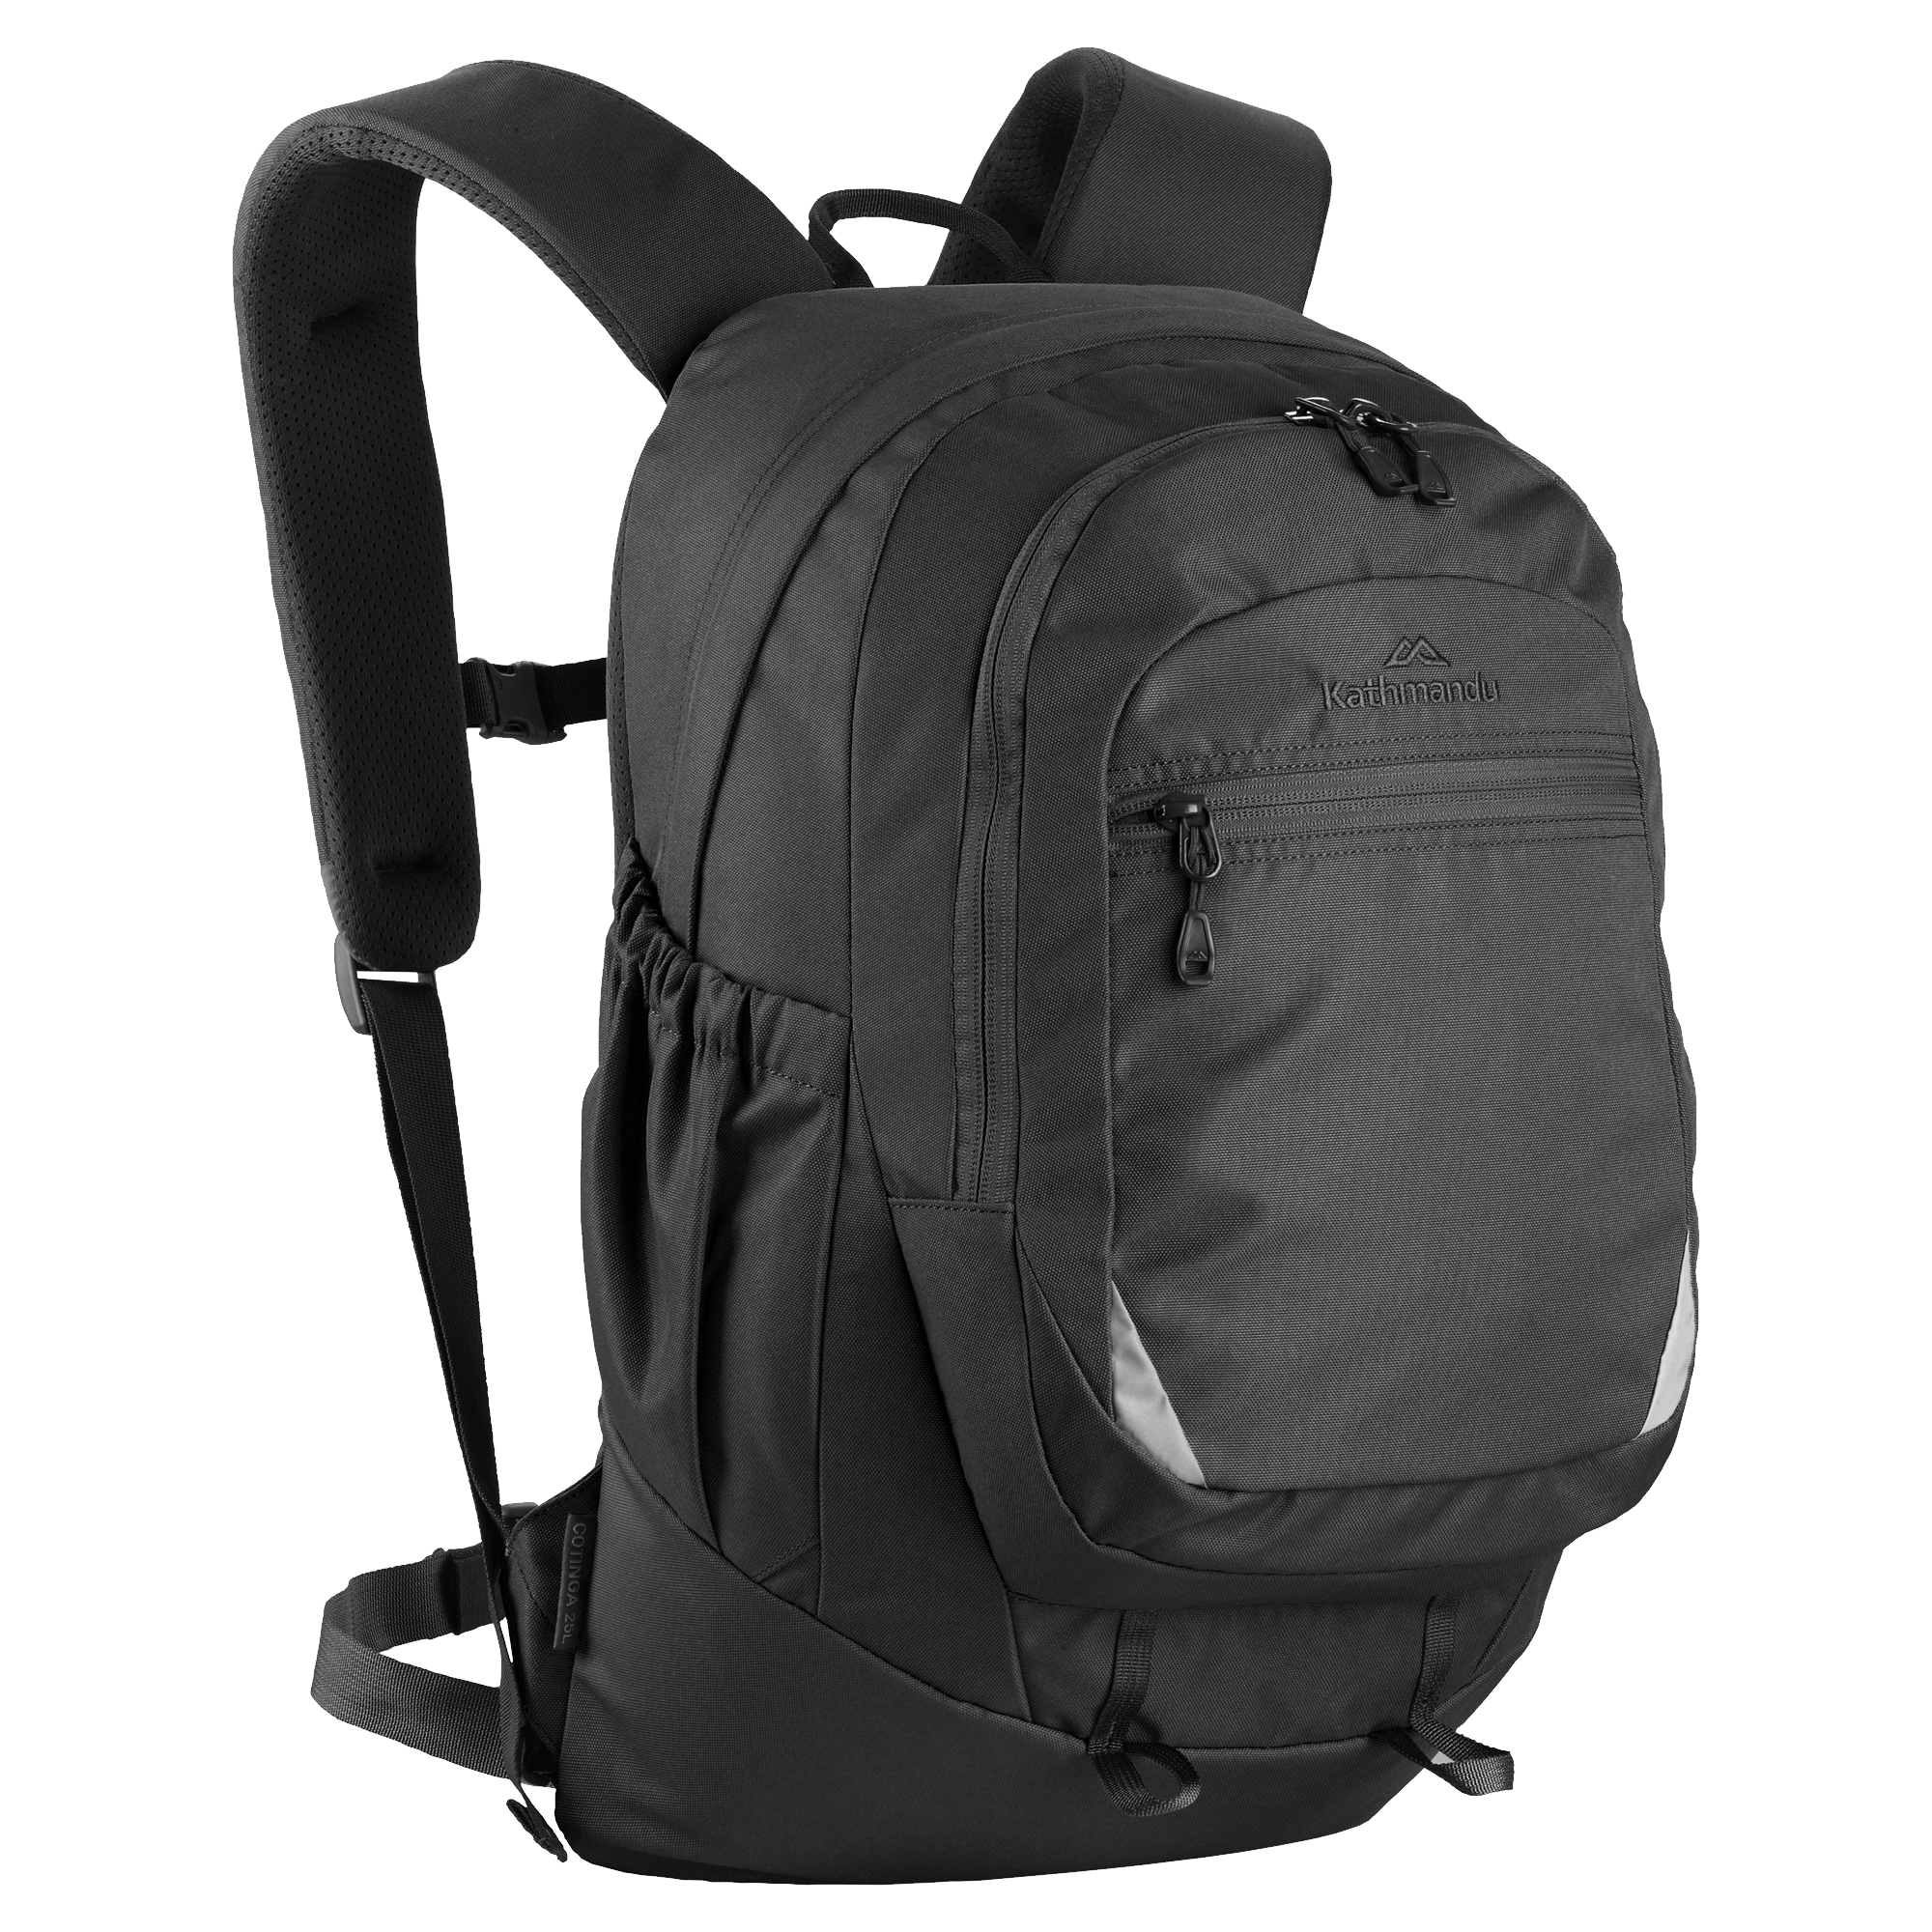 Bag clipart haversack. Kathmandu black backpack transparent